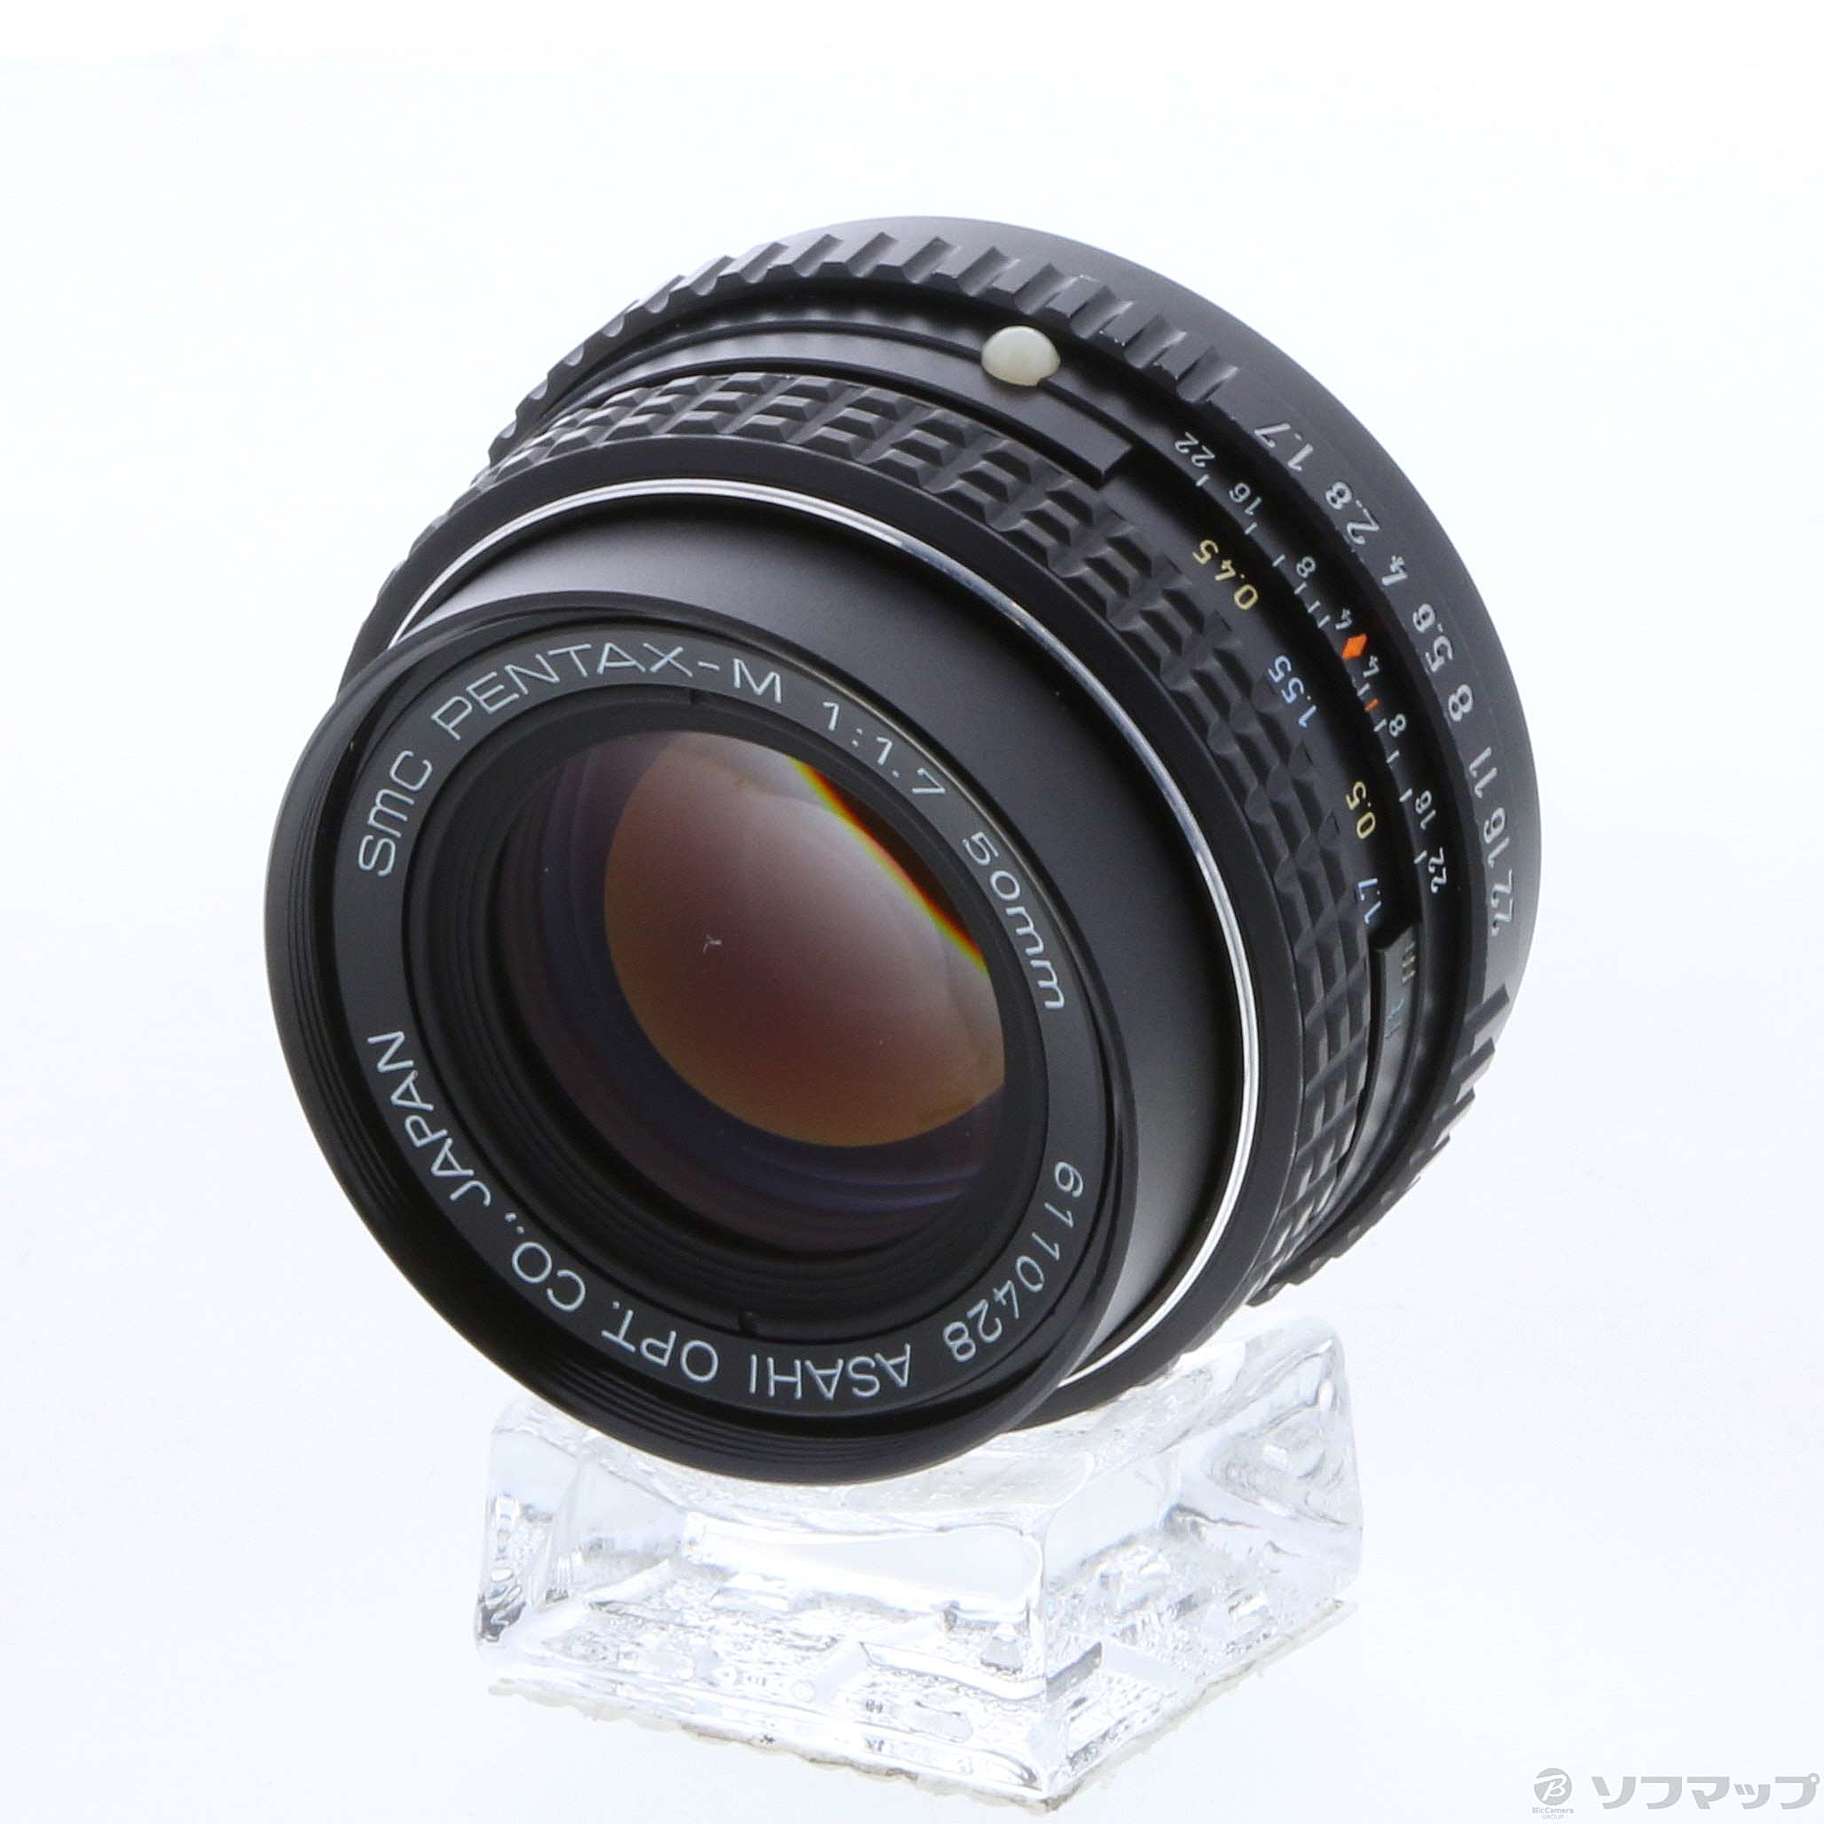 SMC PENTAX M 50mm 1.4 マニュアル 単焦点レンズ - レンズ(単焦点)